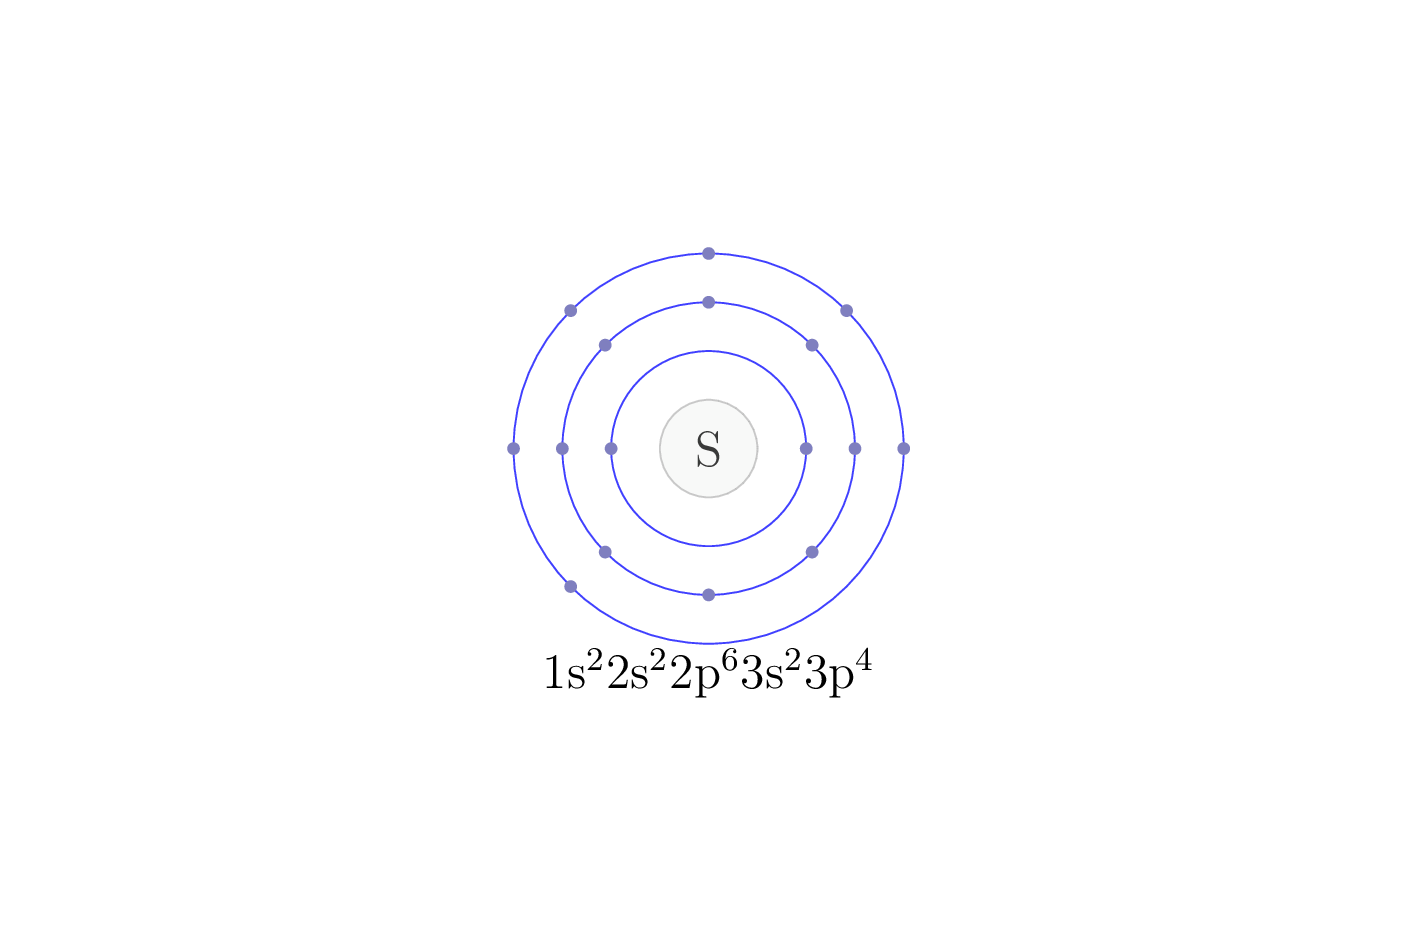 electron configuration of element S